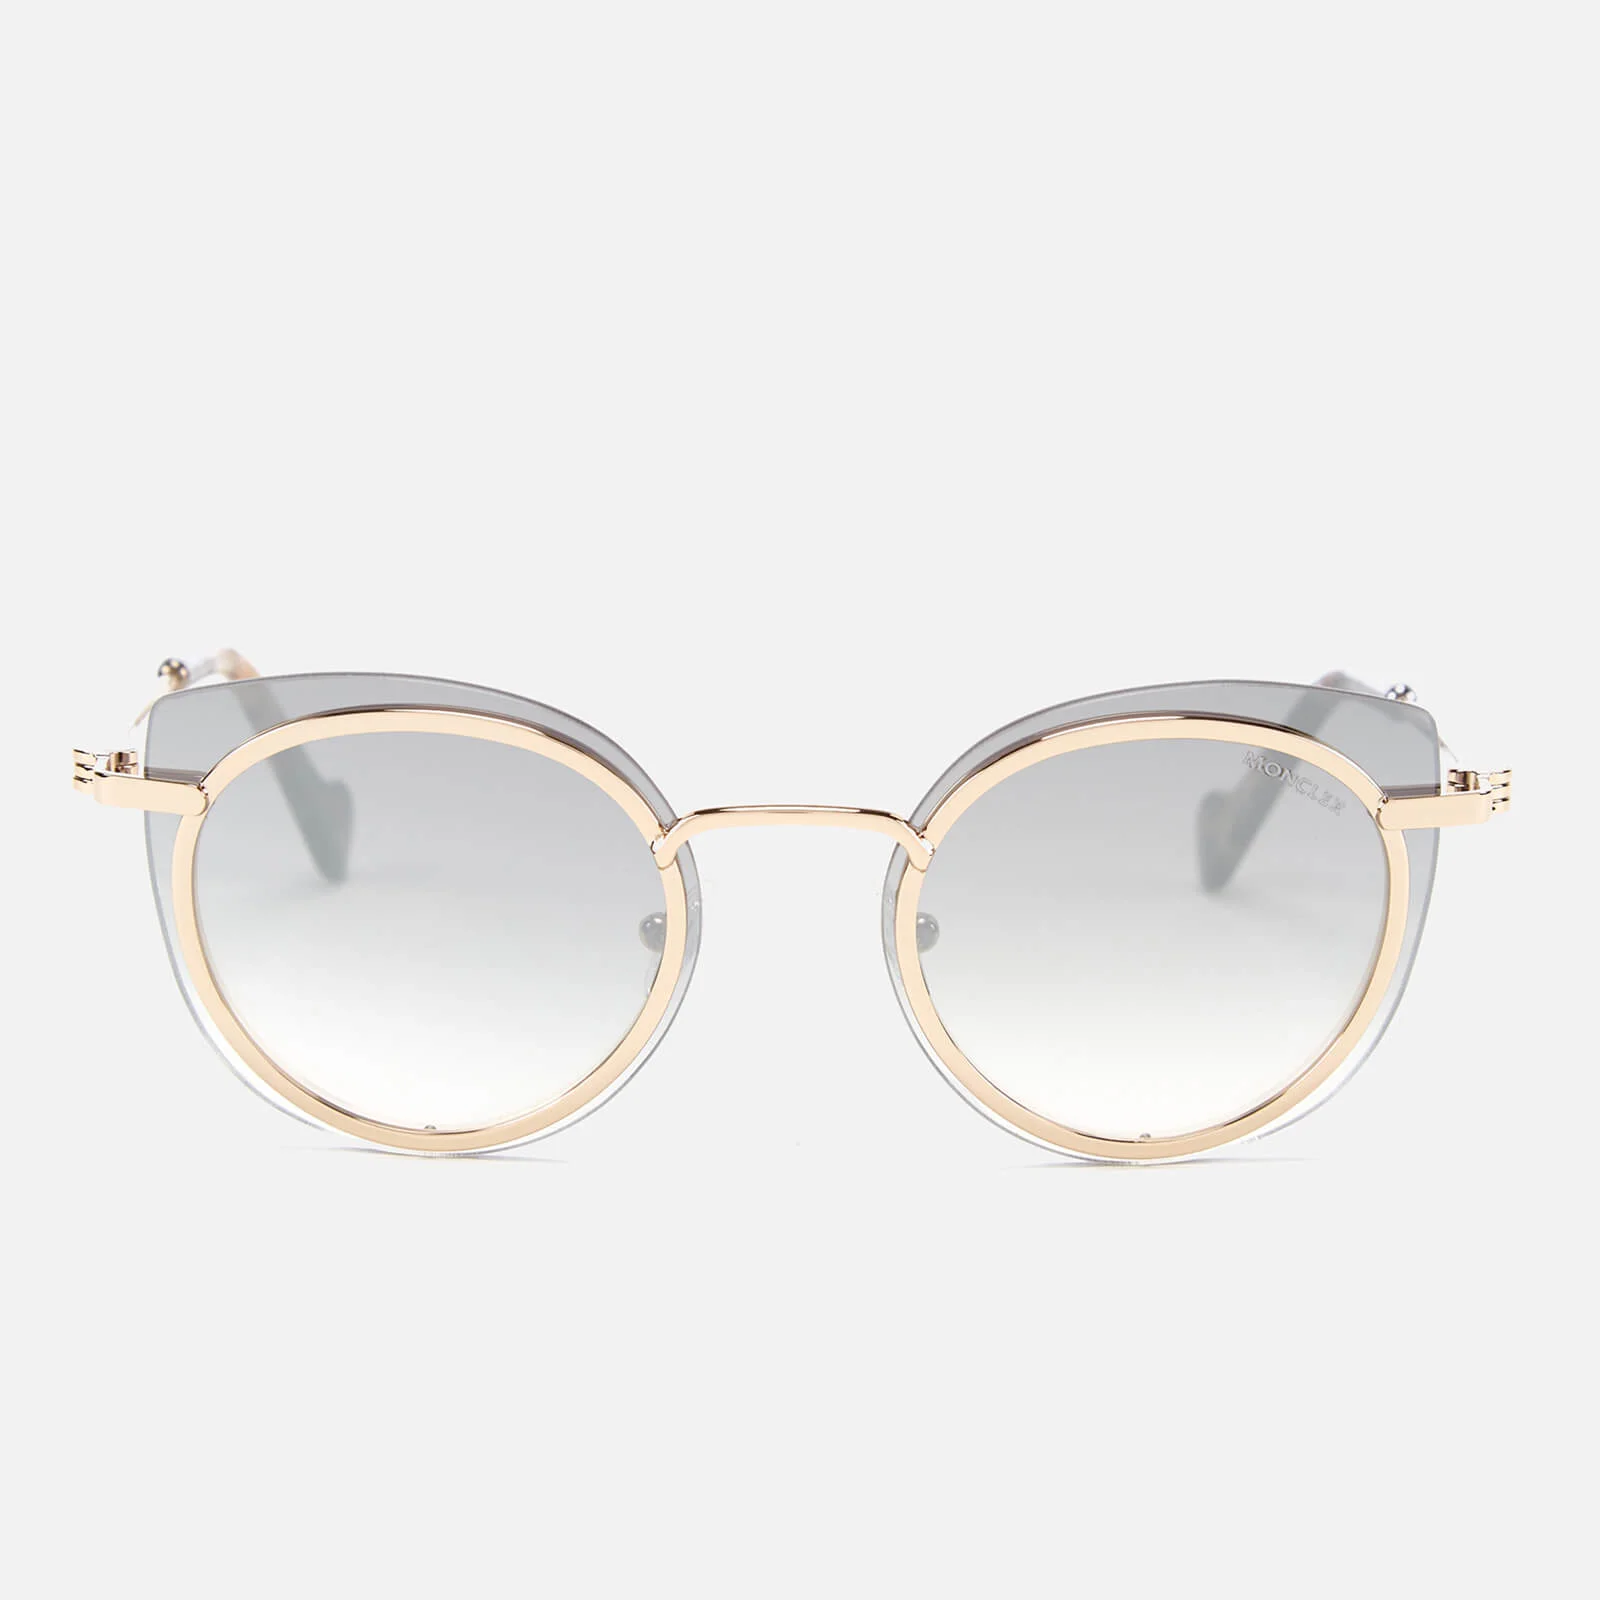 Moncler Women's Oval Sunglasses - Rose Gold/Smoke Mirror Image 1